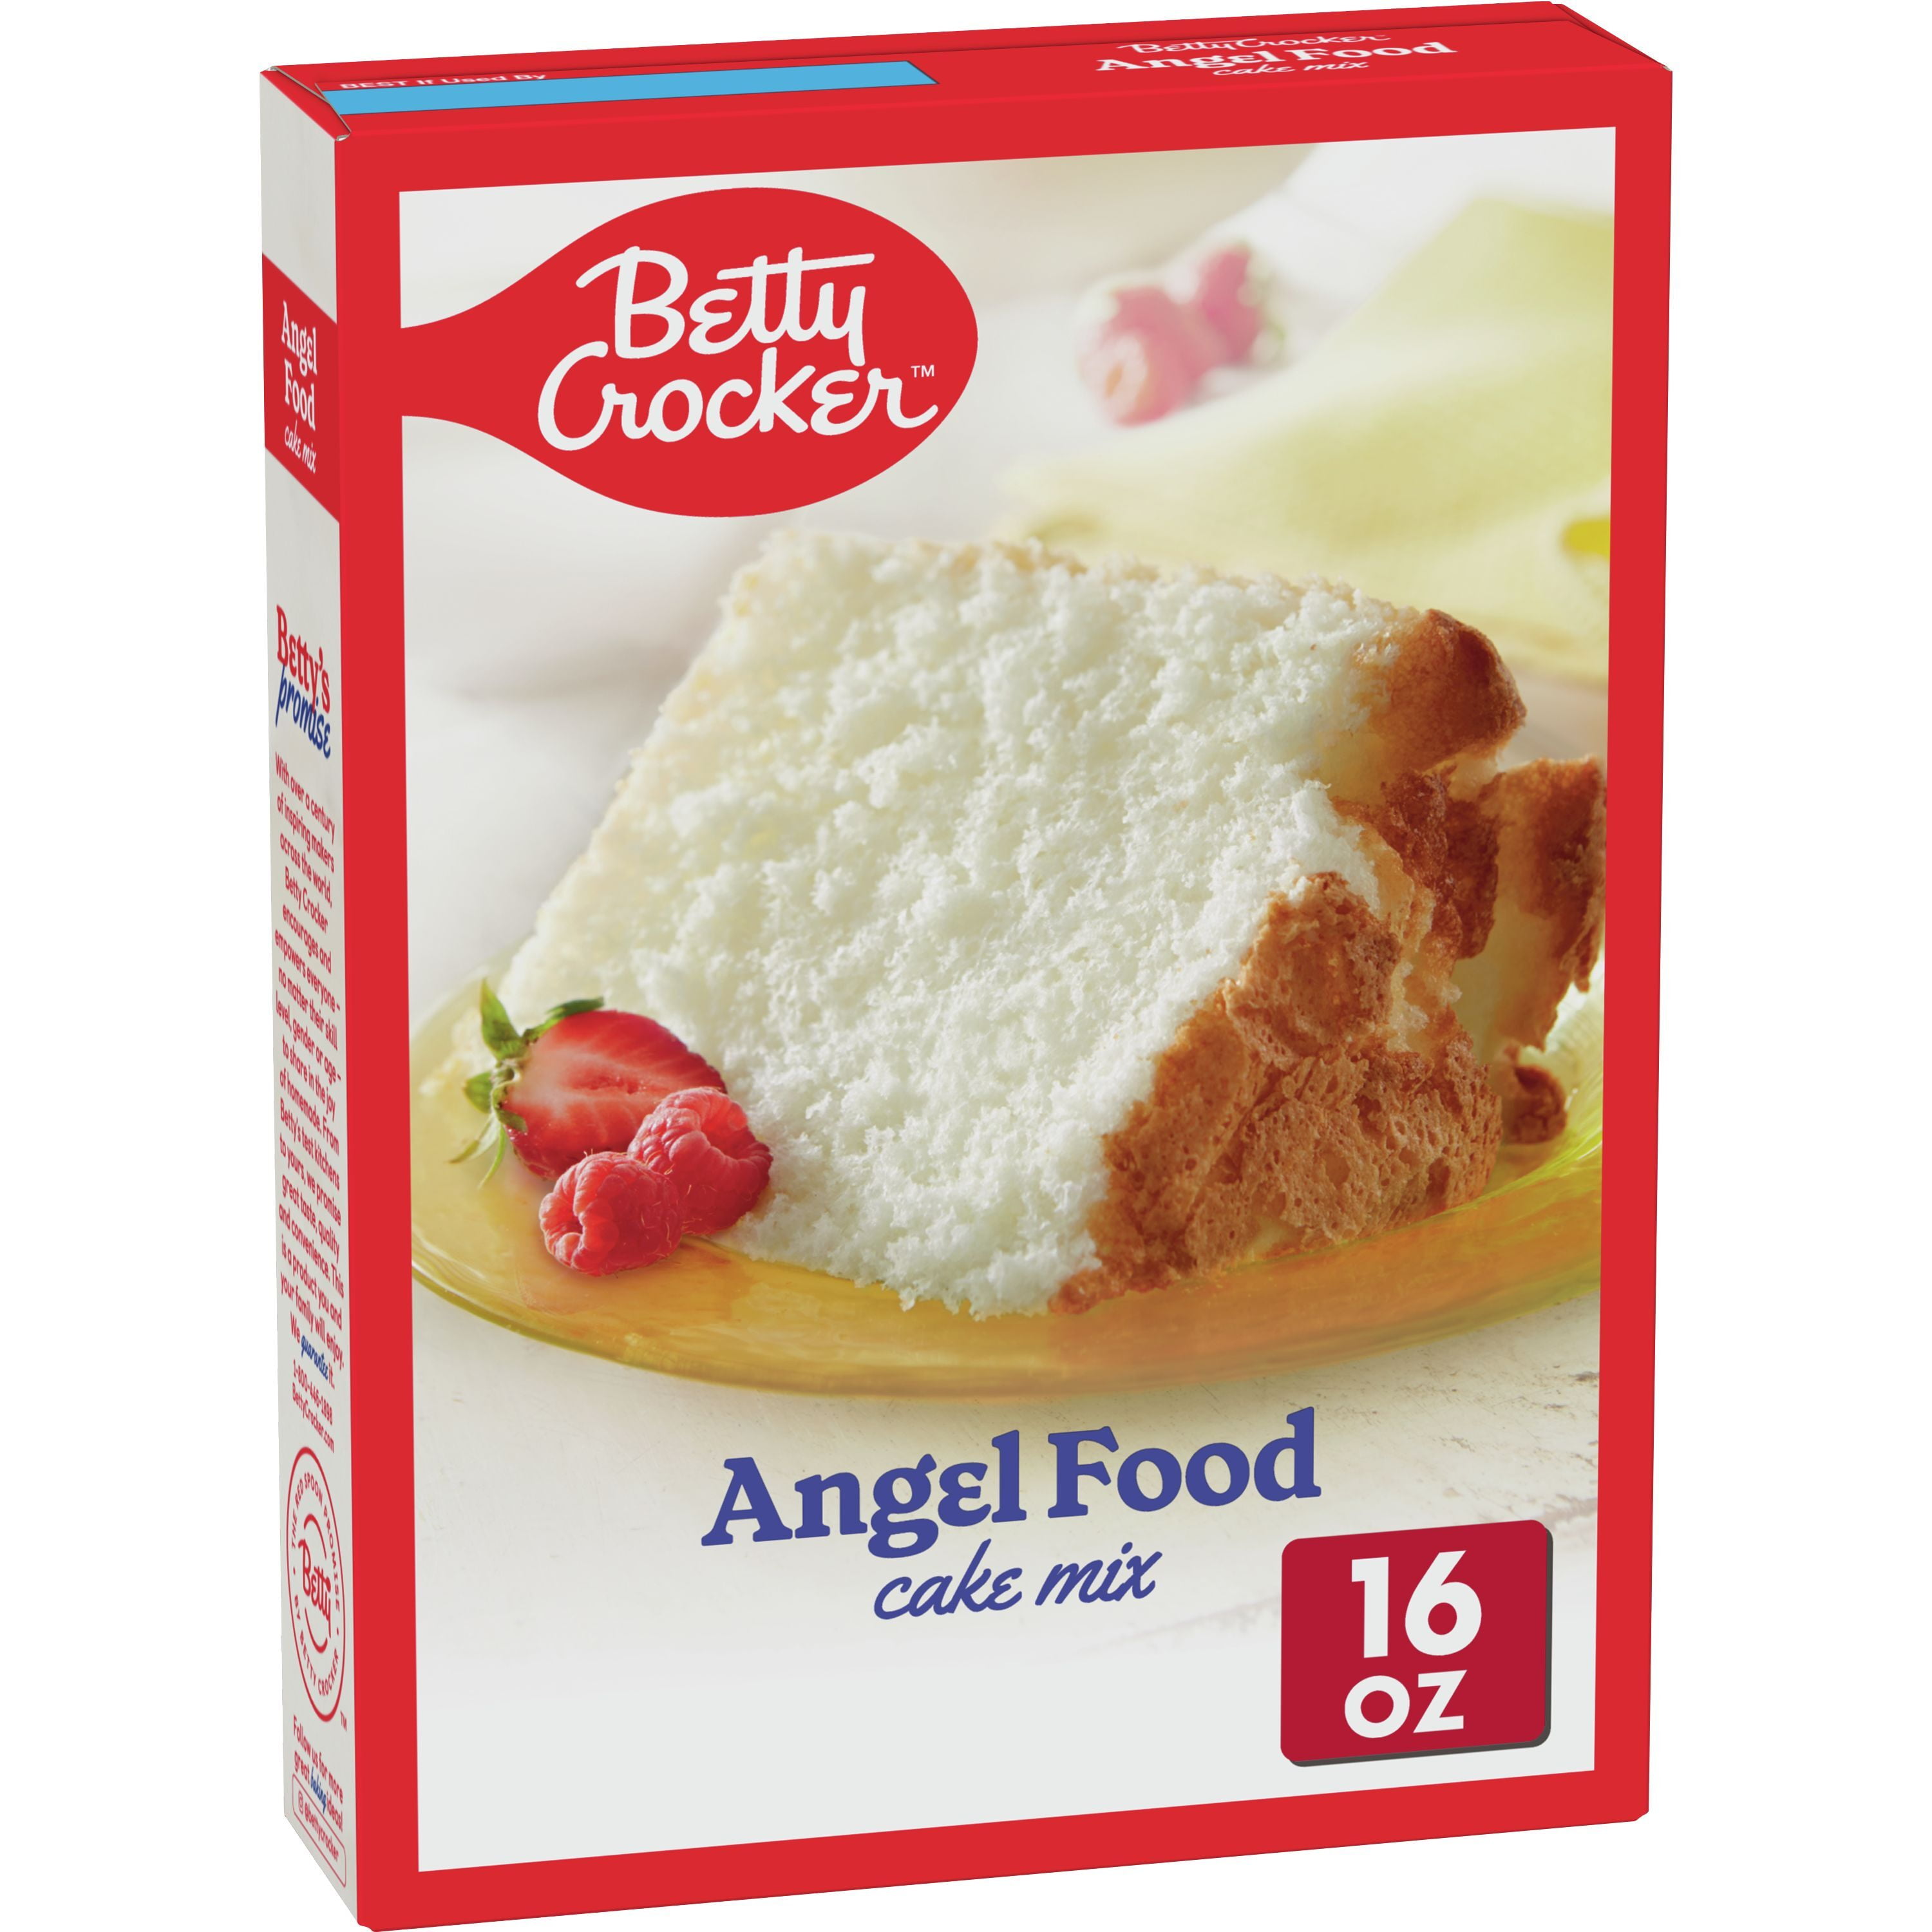 Betty Crocker Angel Food Cake Mix, 16 oz